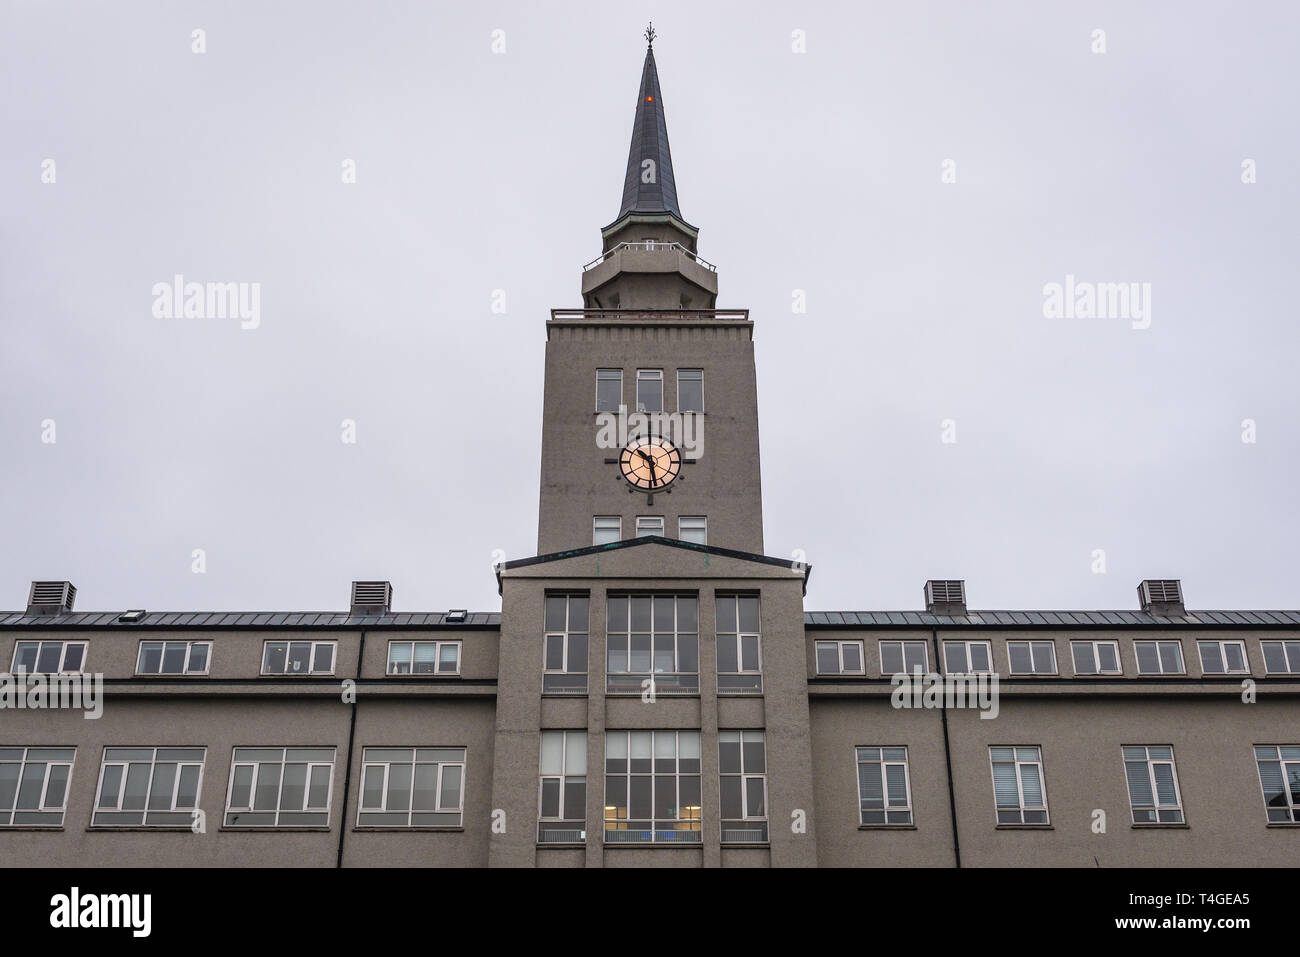 Taekniskolinn - Technical College of Reykjavik, capital city of Iceland Stock Photo